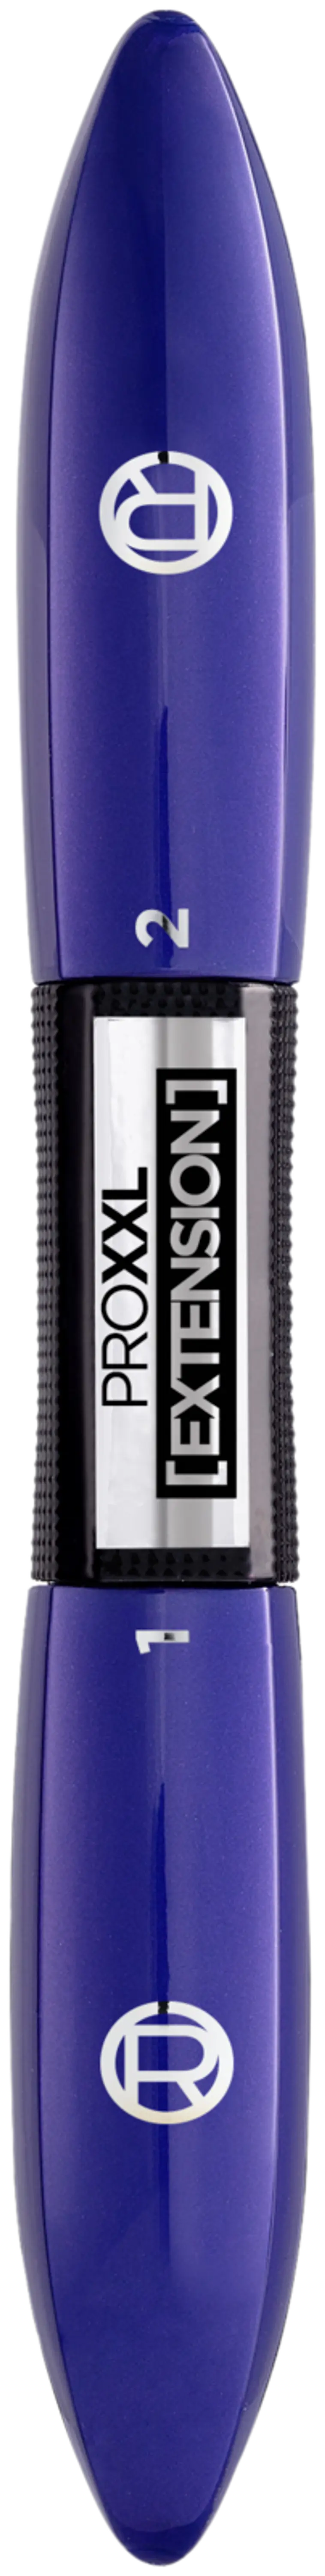 L'Oréal Paris Pro XXL Extension musta maskara 12ml